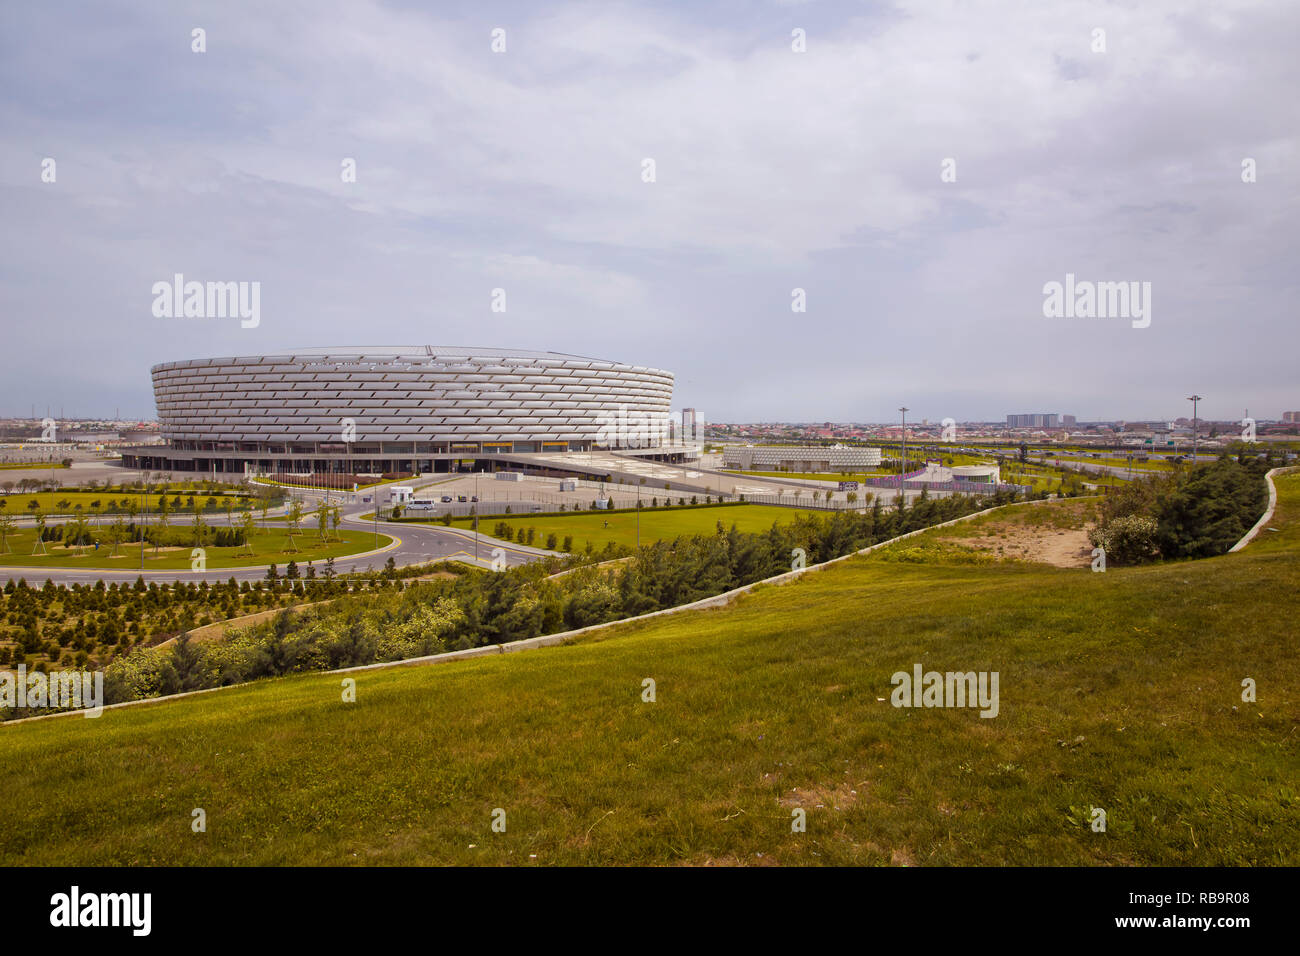 Baku, Azerbaijan : The match day at Baku Olympic Stadium . There is greenery around the Baku Olympic Stadium Stock Photo